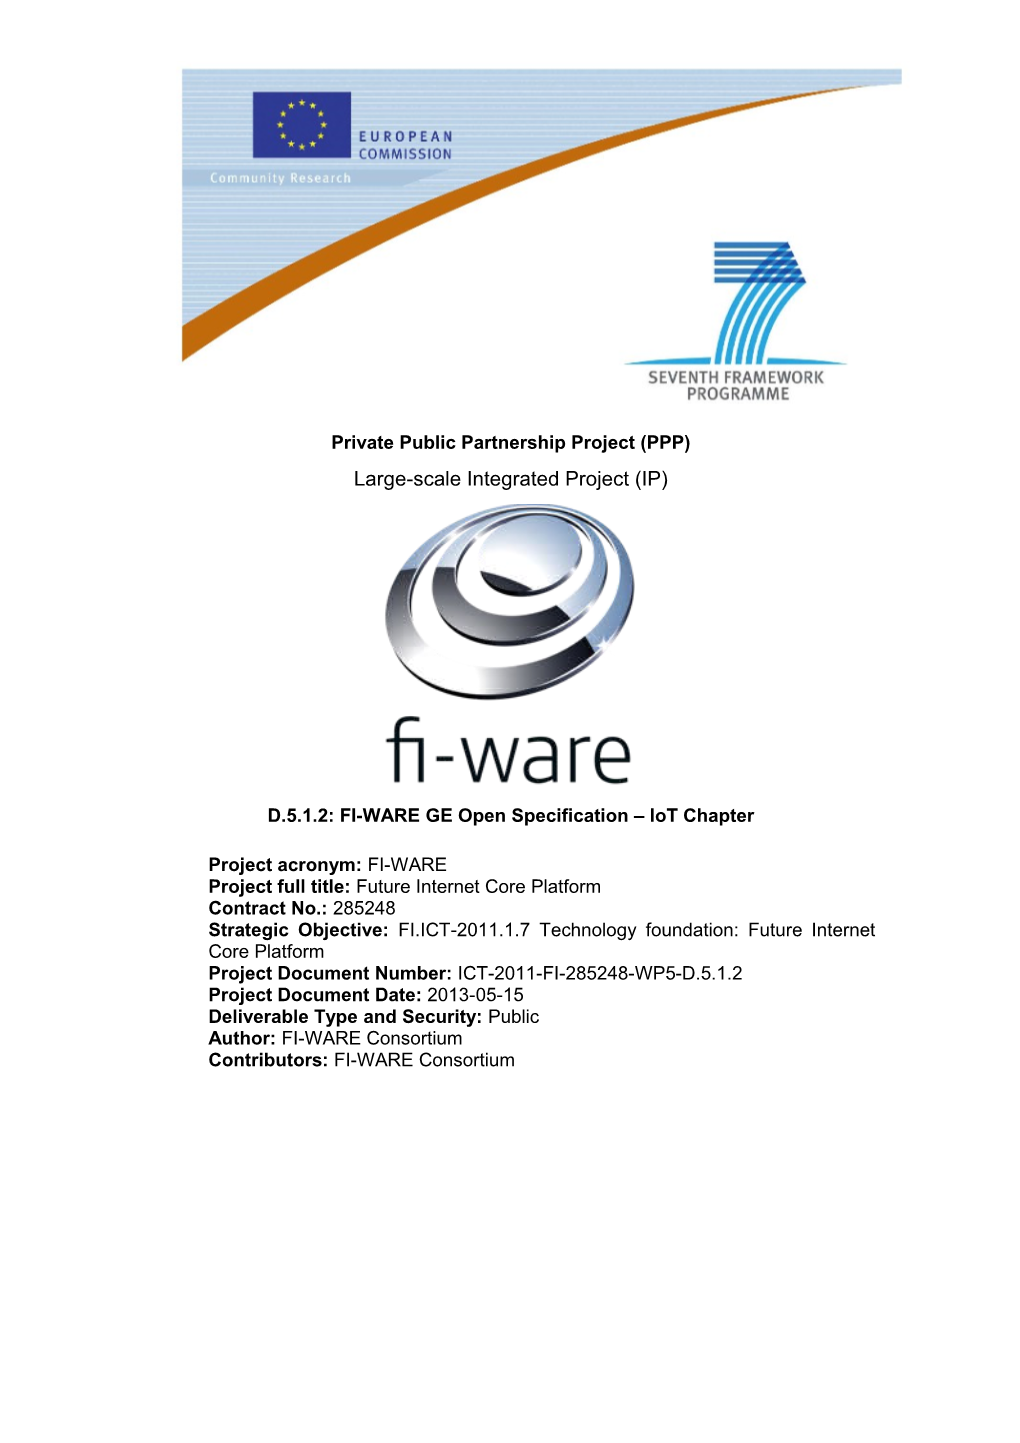 D.5.1.2 FI-WARE GE Open Specification